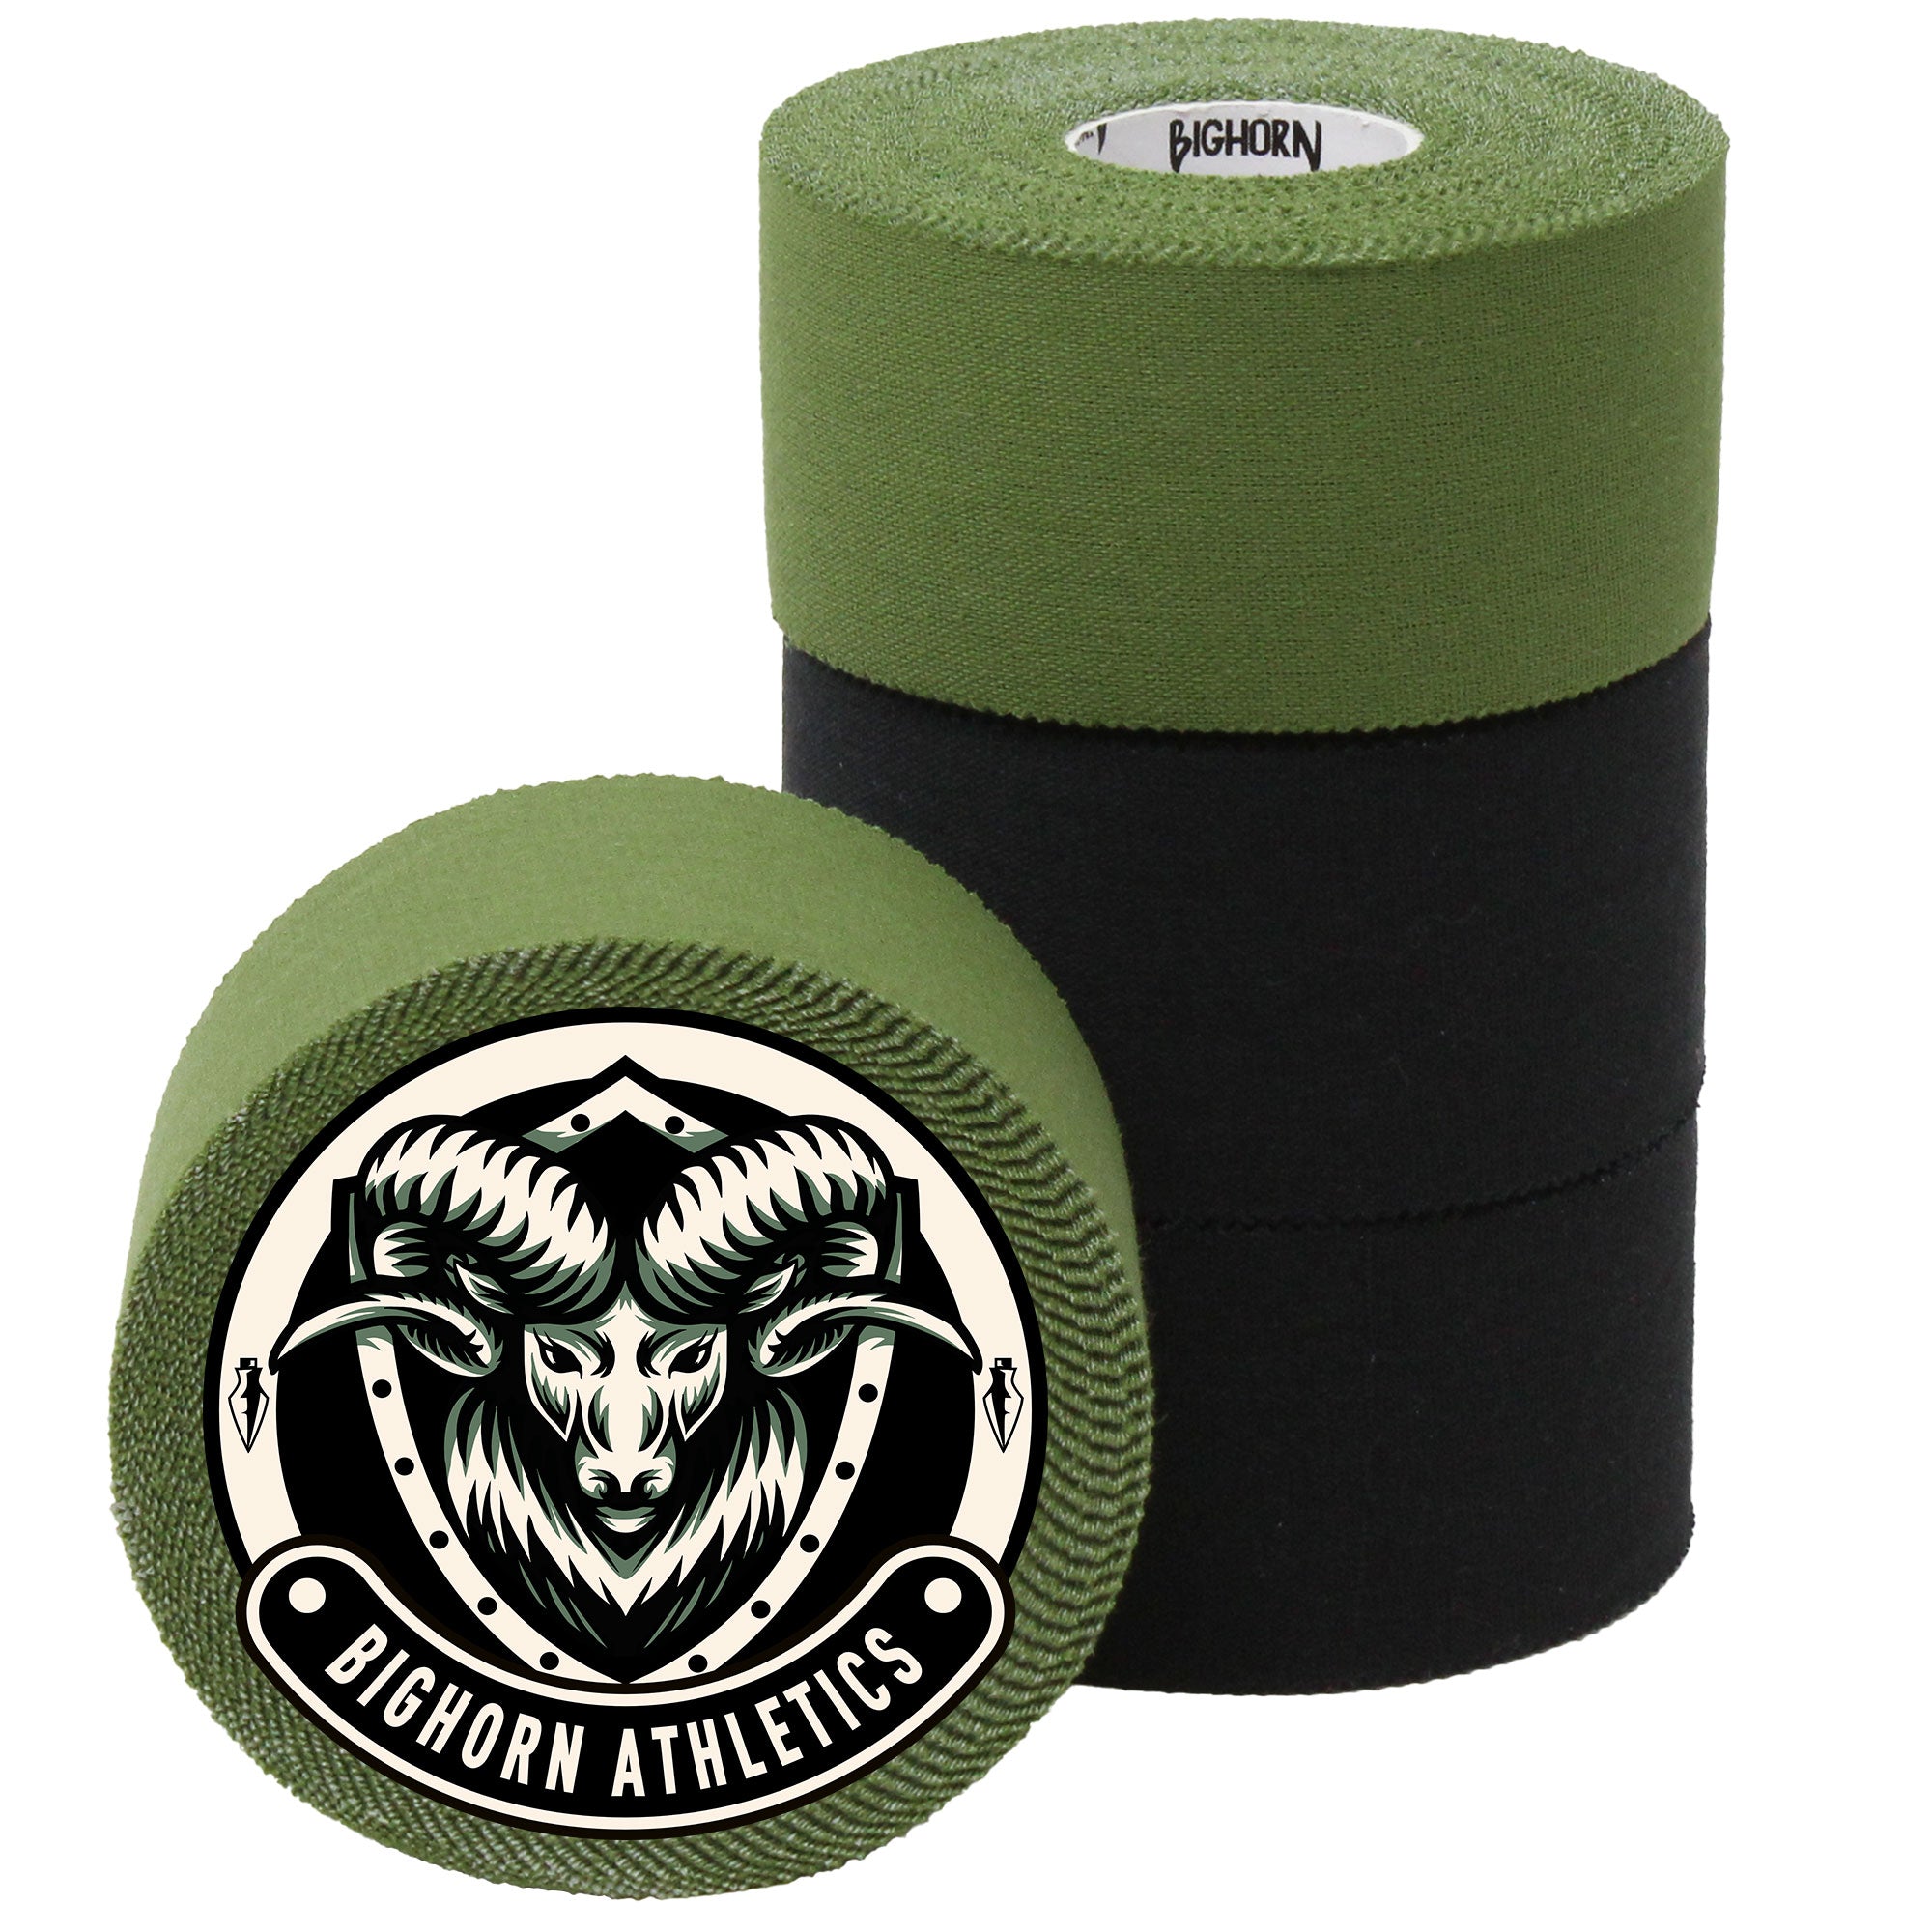 EZ-Tear Athletic Sports Tape, 1.5-Inch x 45-feet, 4-Rolls (Military Green & Black)